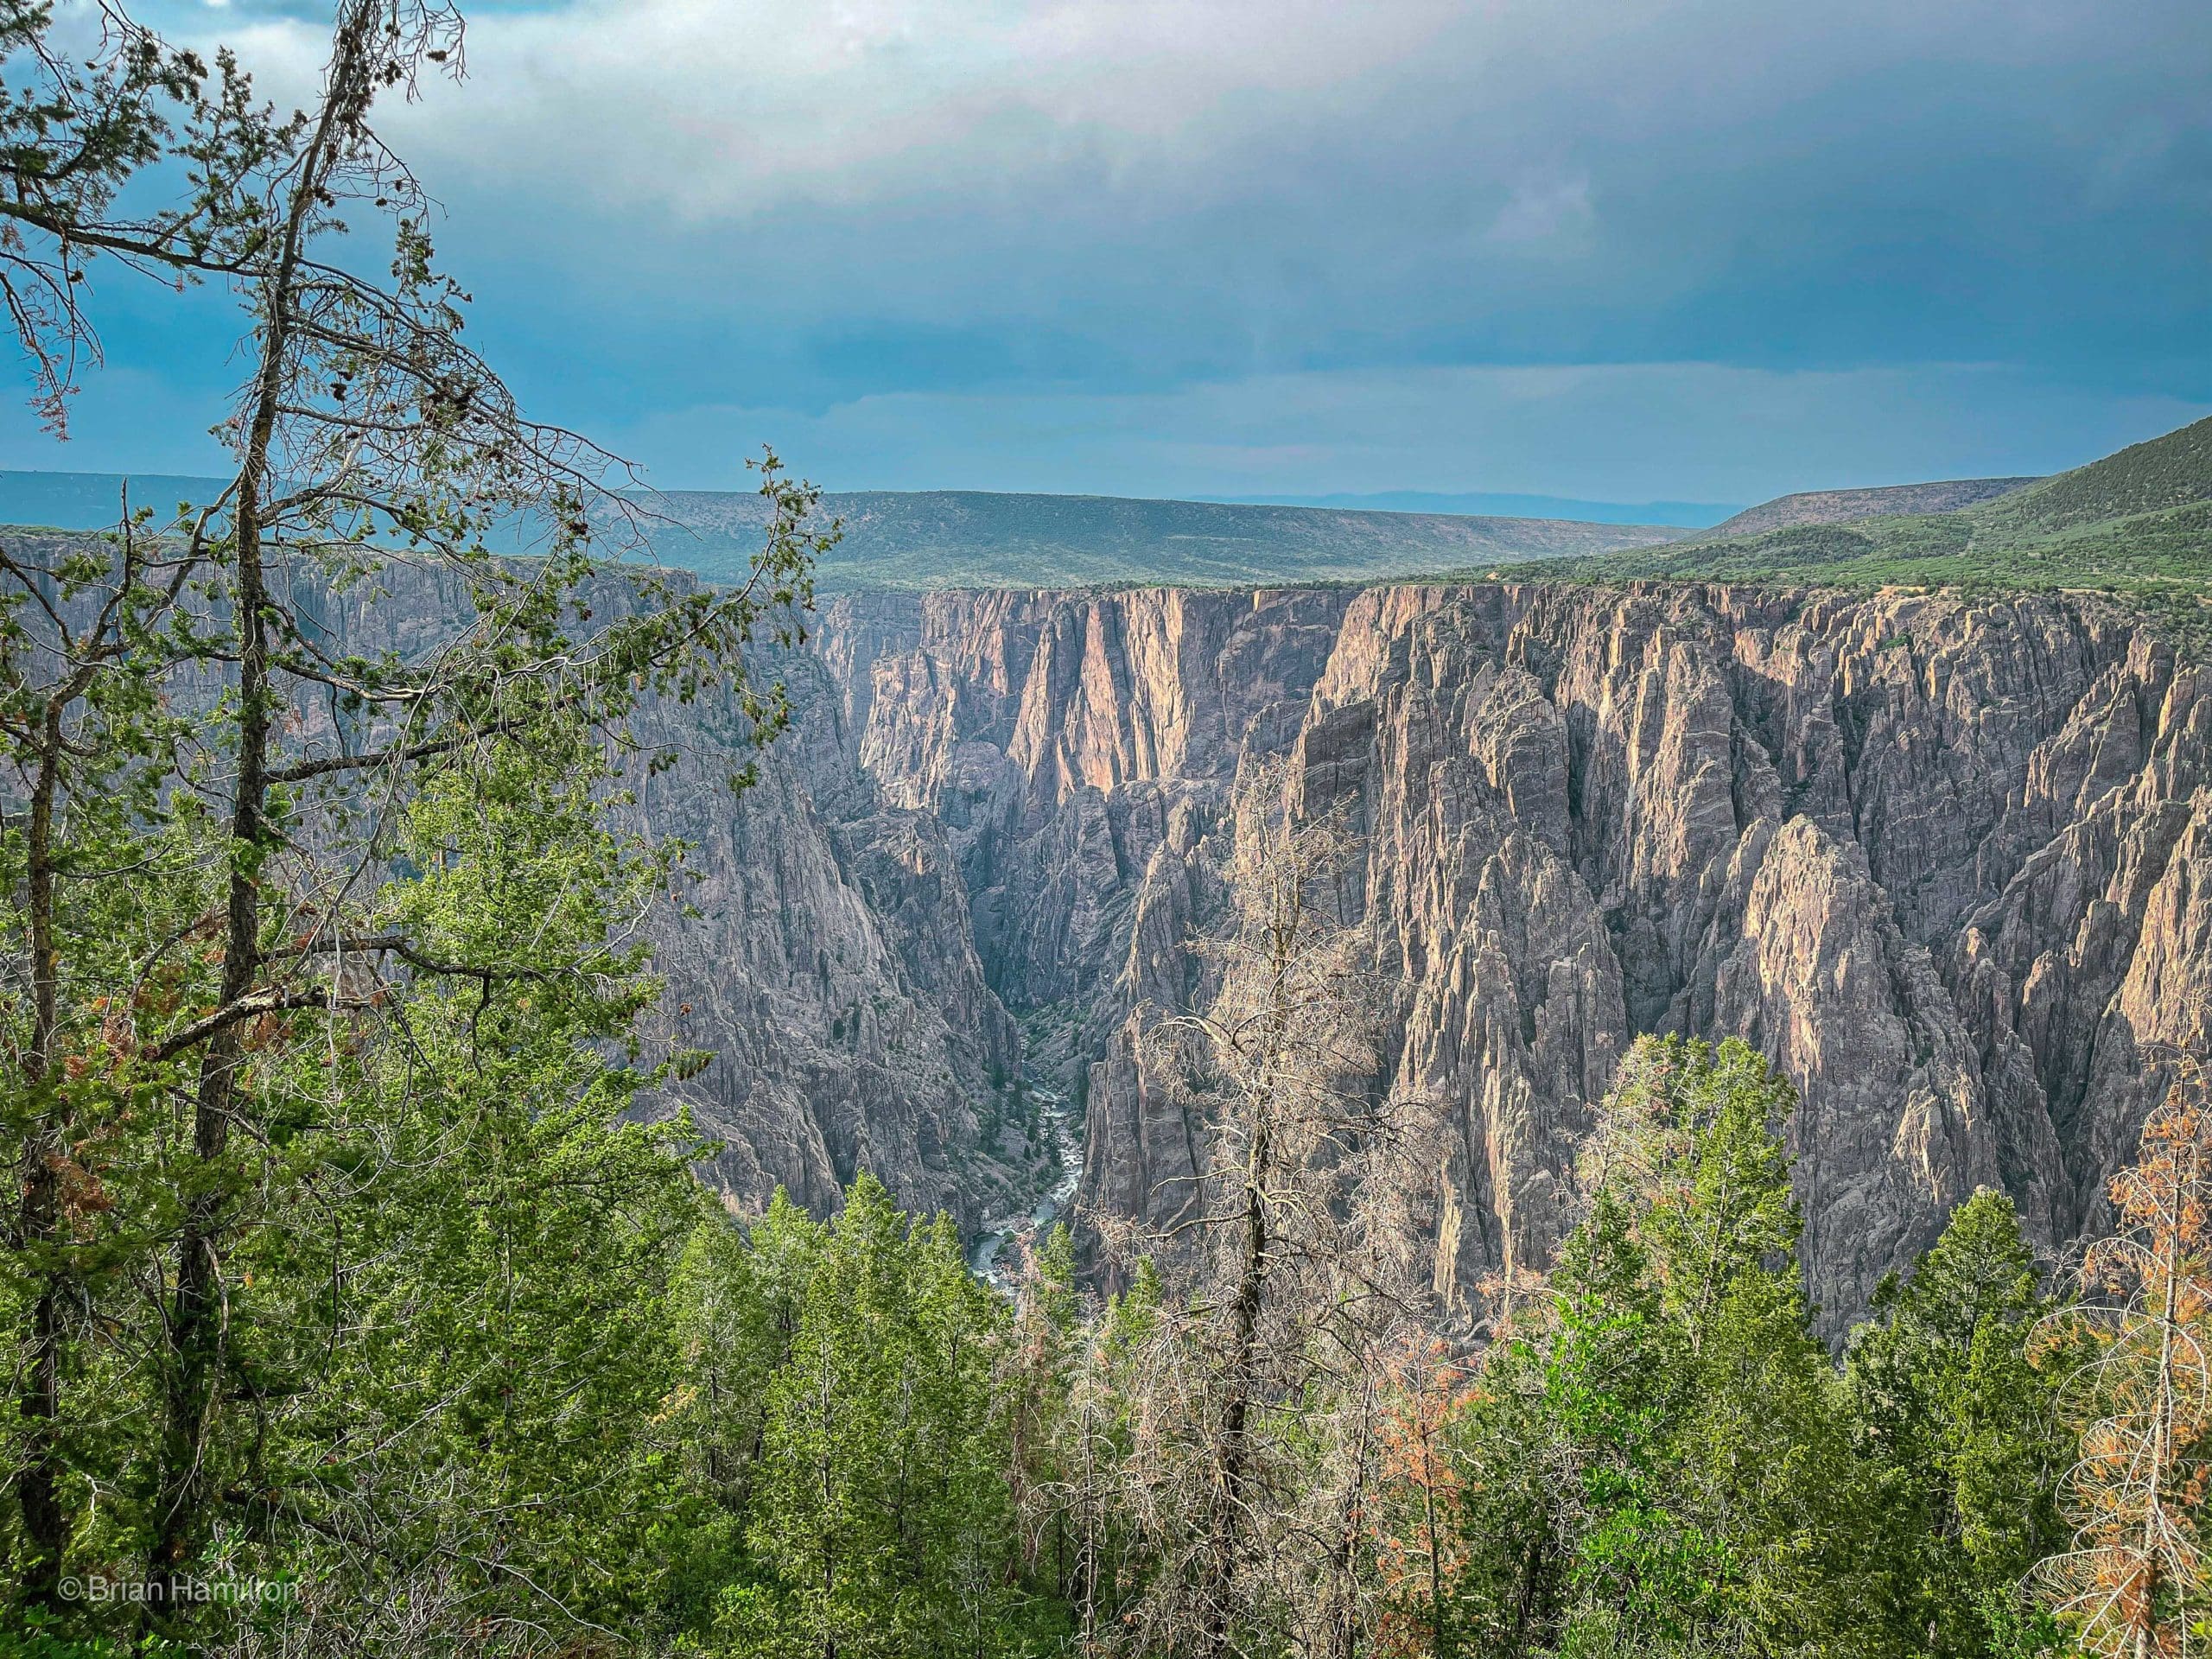 Photo Essay: South Rim at Black Canyon of the Gunnison National Park, Colorado